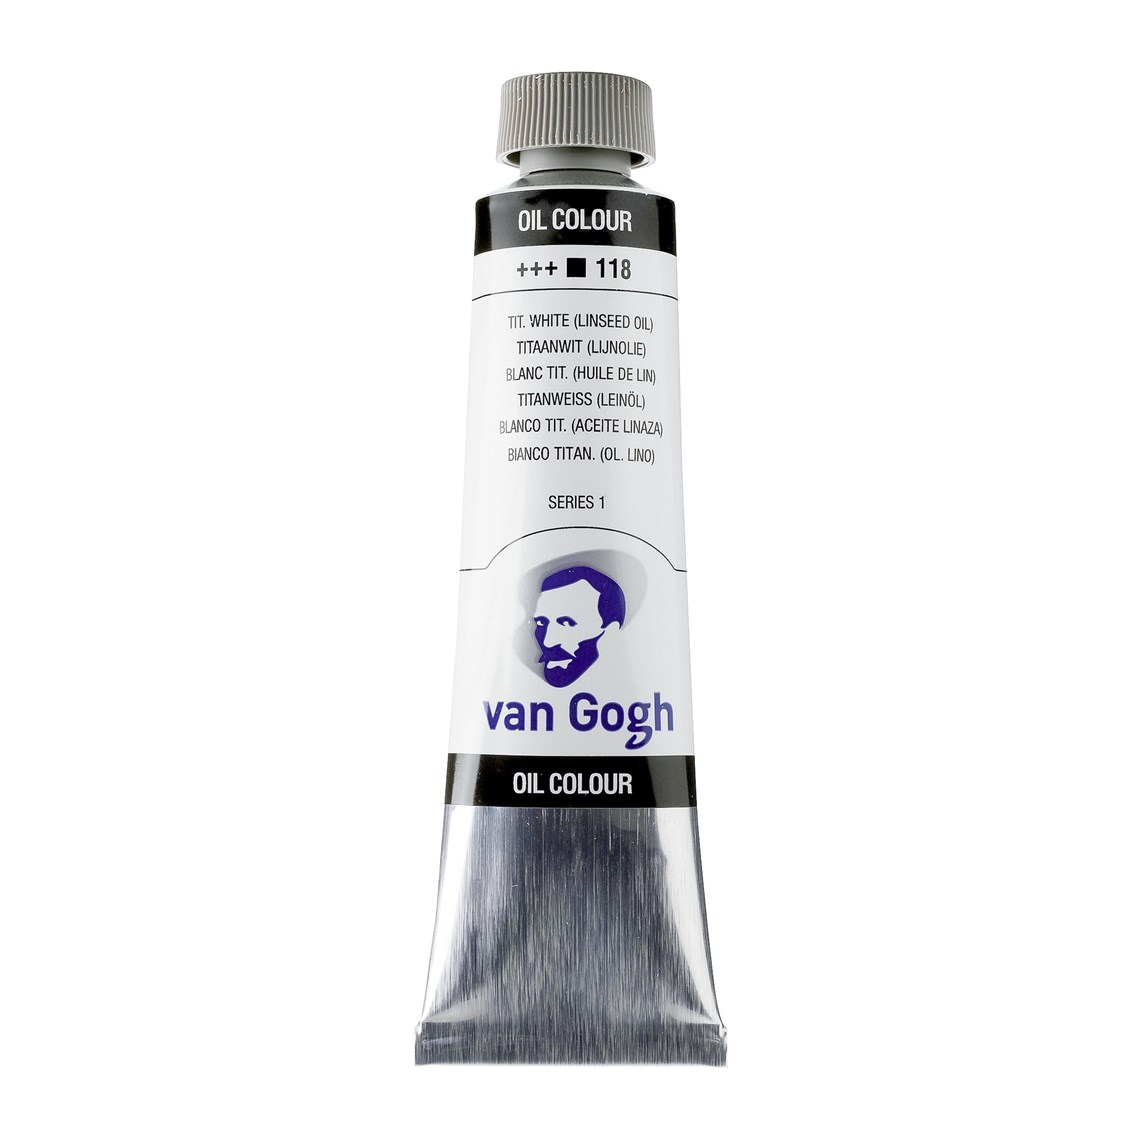 Oleo Van Gogh blanco titanio (aceite de linaza) tubo 200ml serie 1